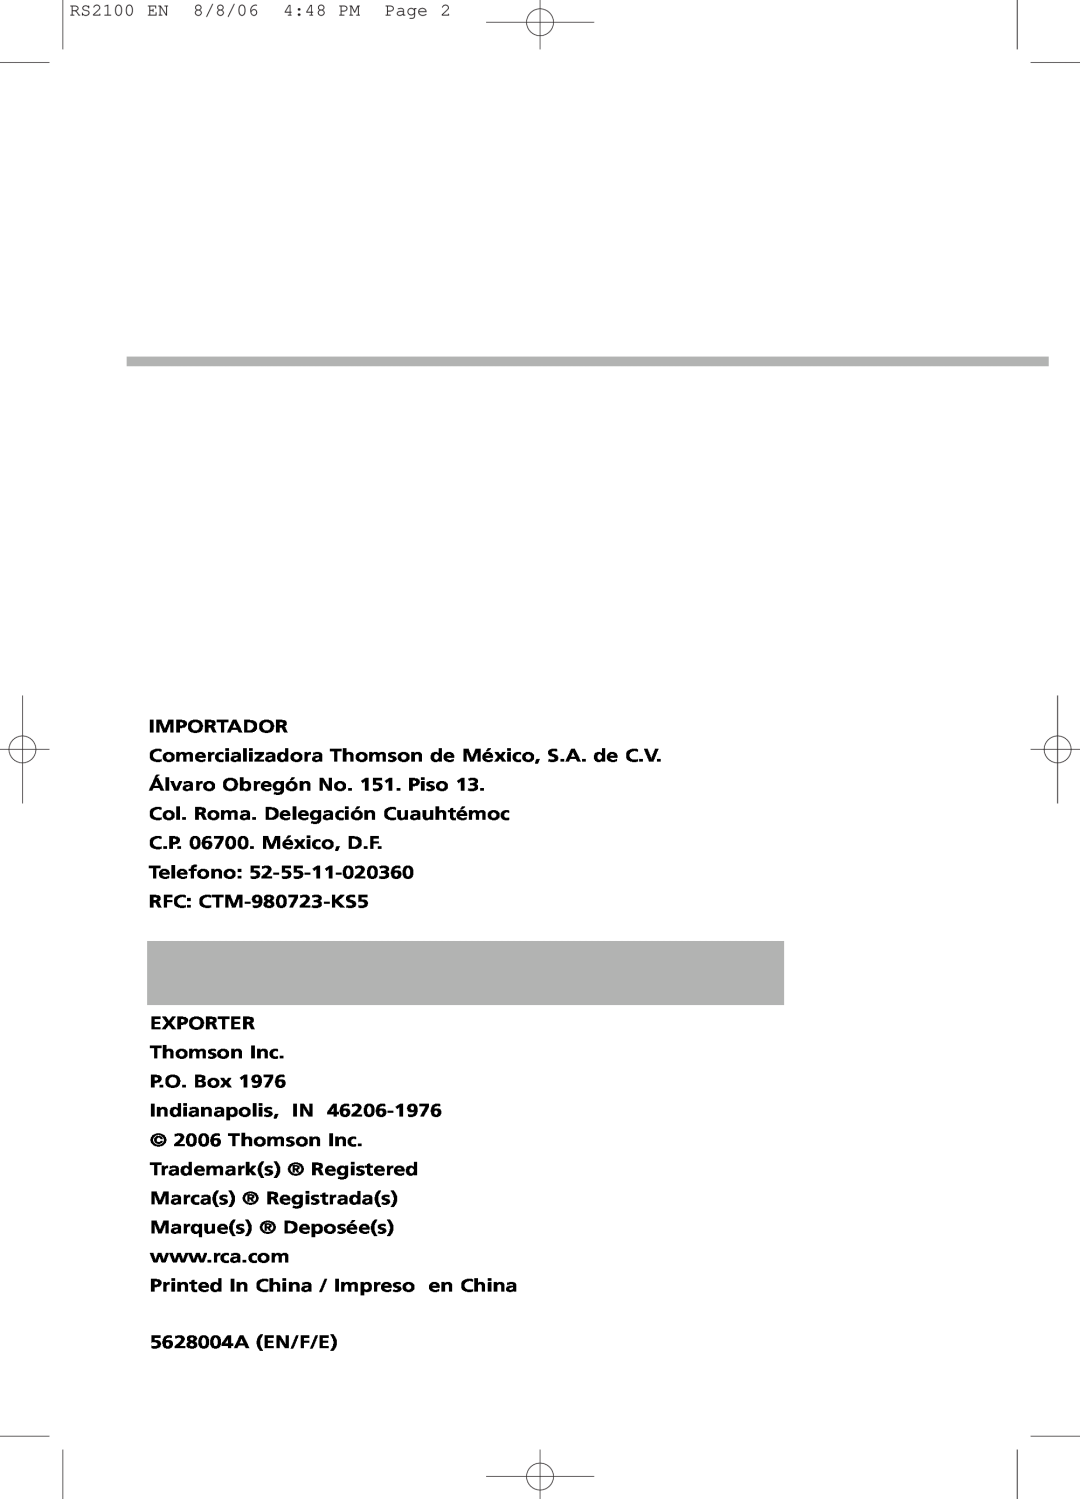 RCA user manual RS2100 EN 8/8/06 4 48 PM Page, Importador 